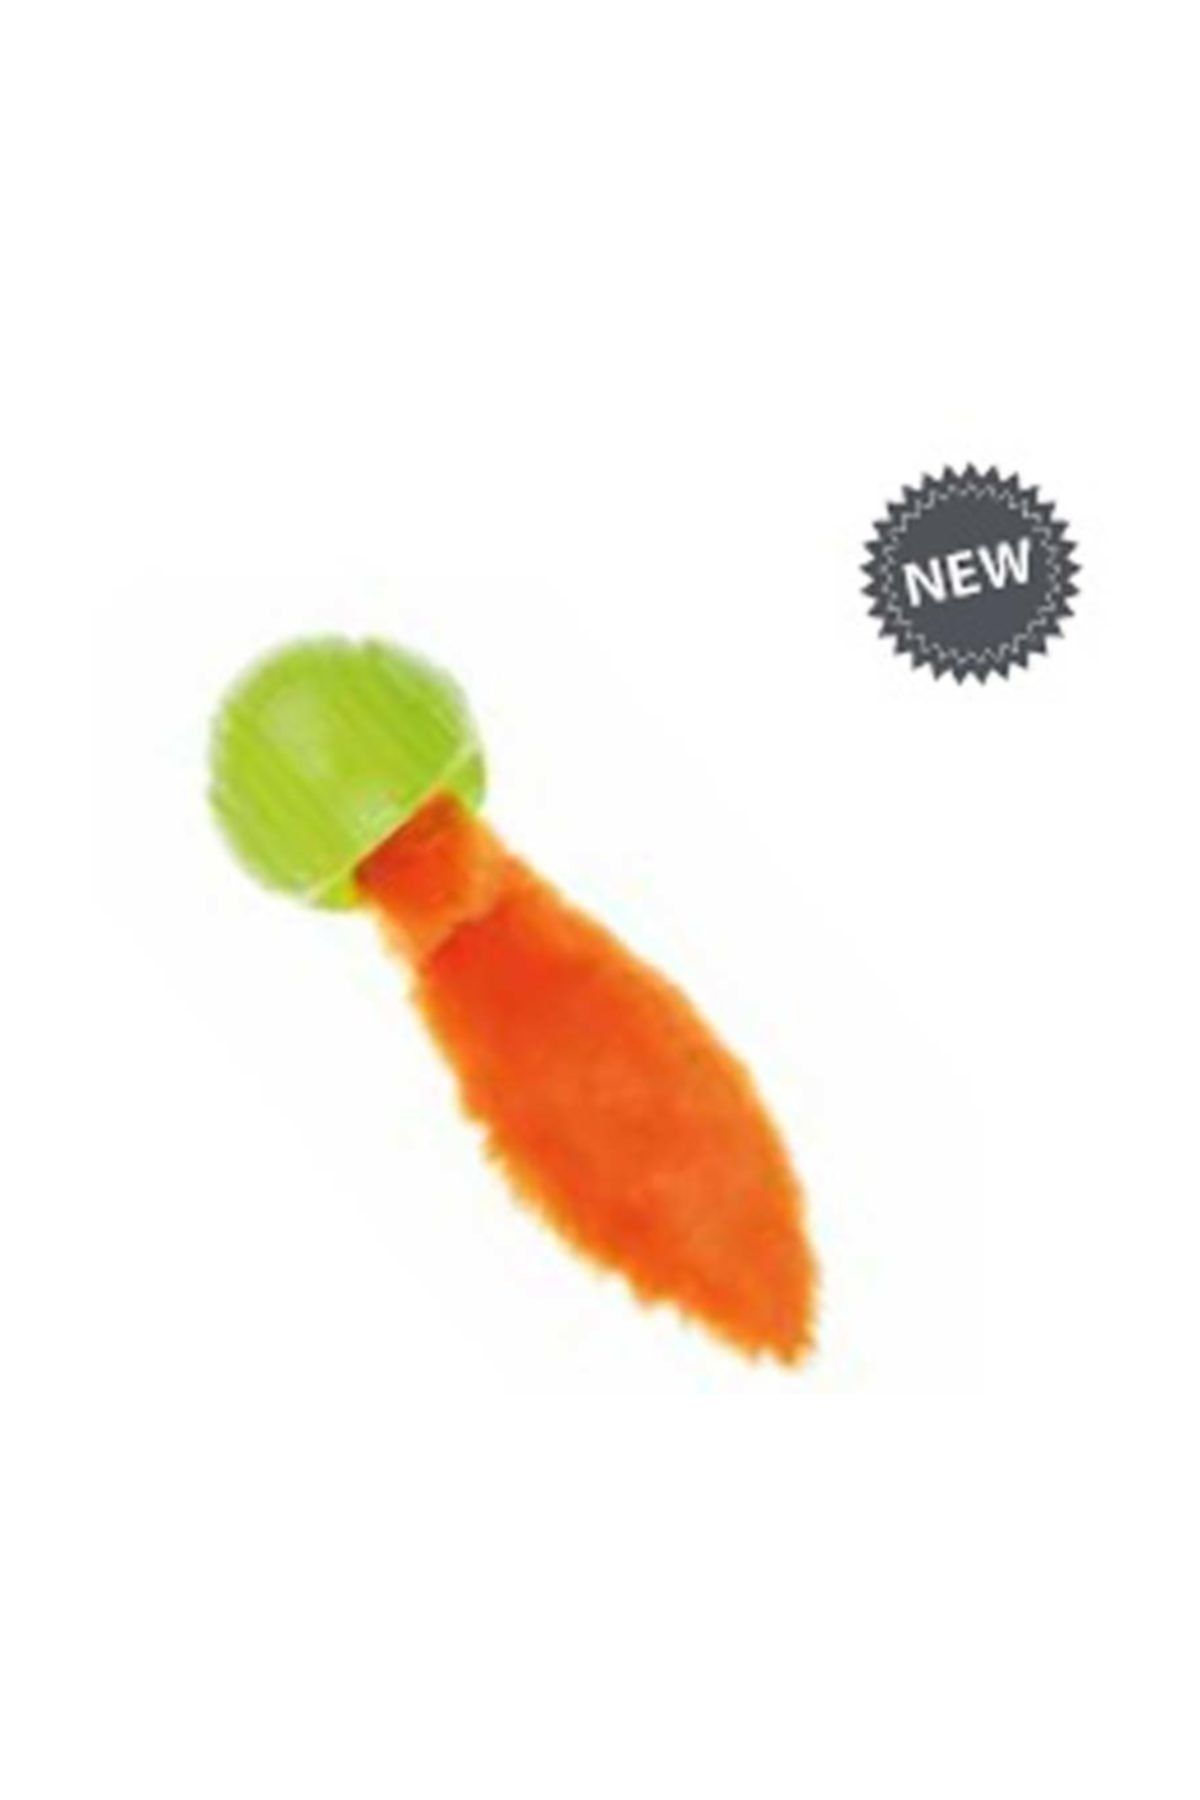 M-PETS Foxball Kauçuk Oyuncak Green/orange 10631599